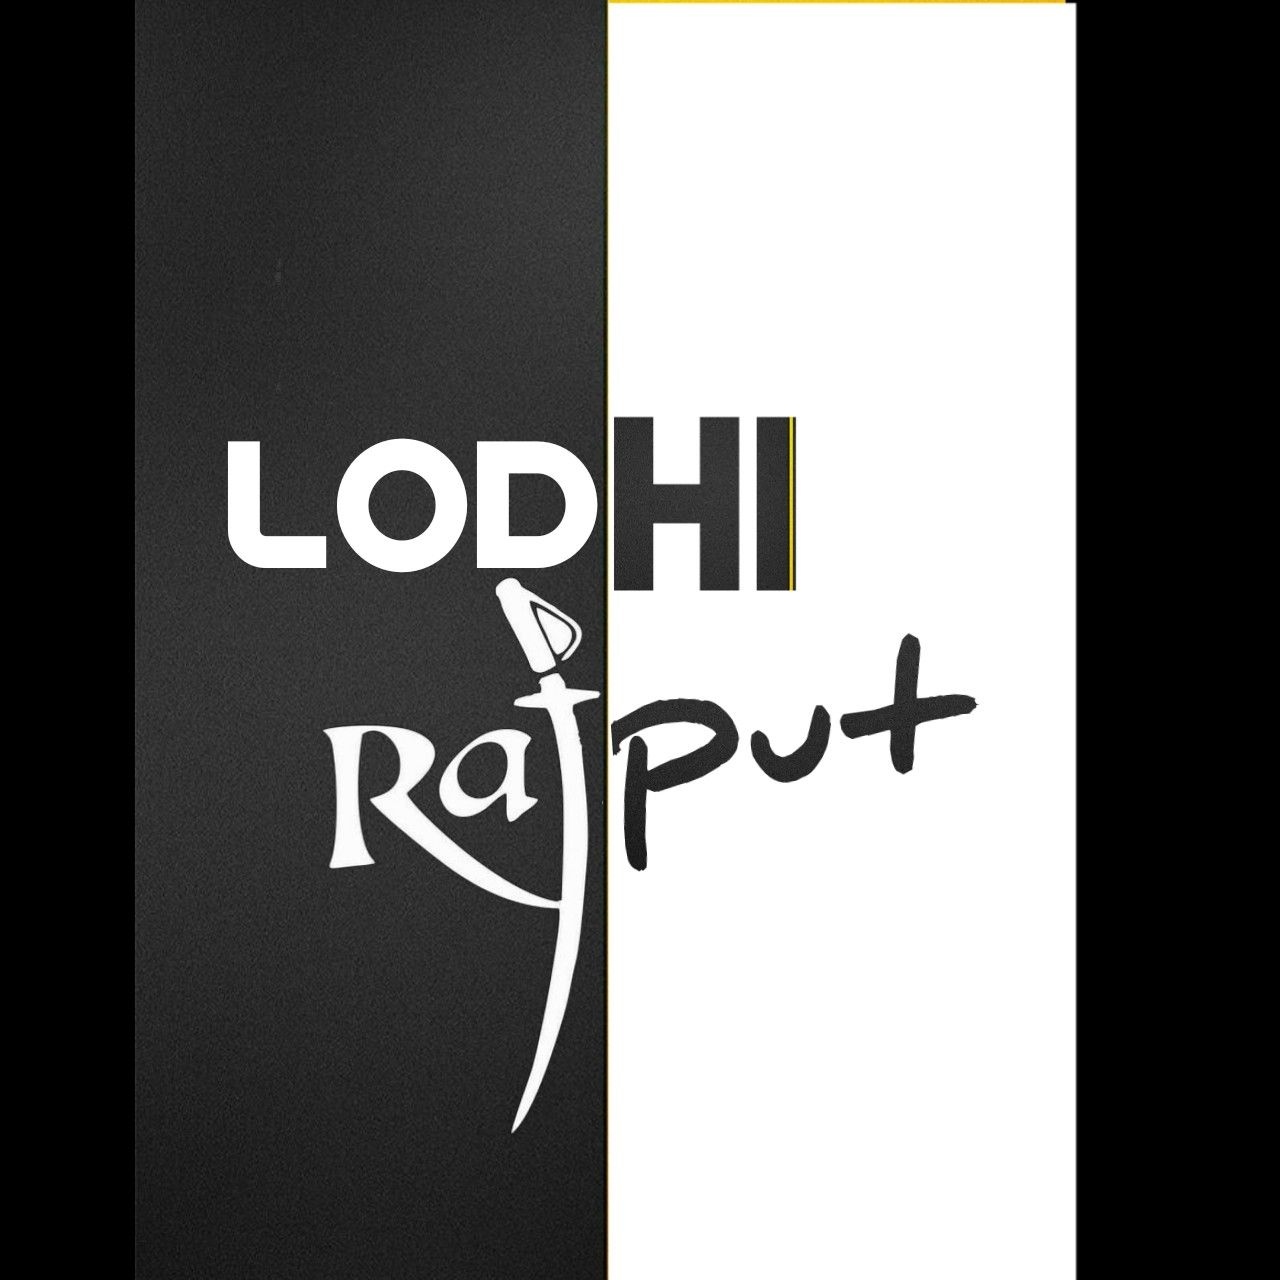 Lodhi Rajput - Black And White